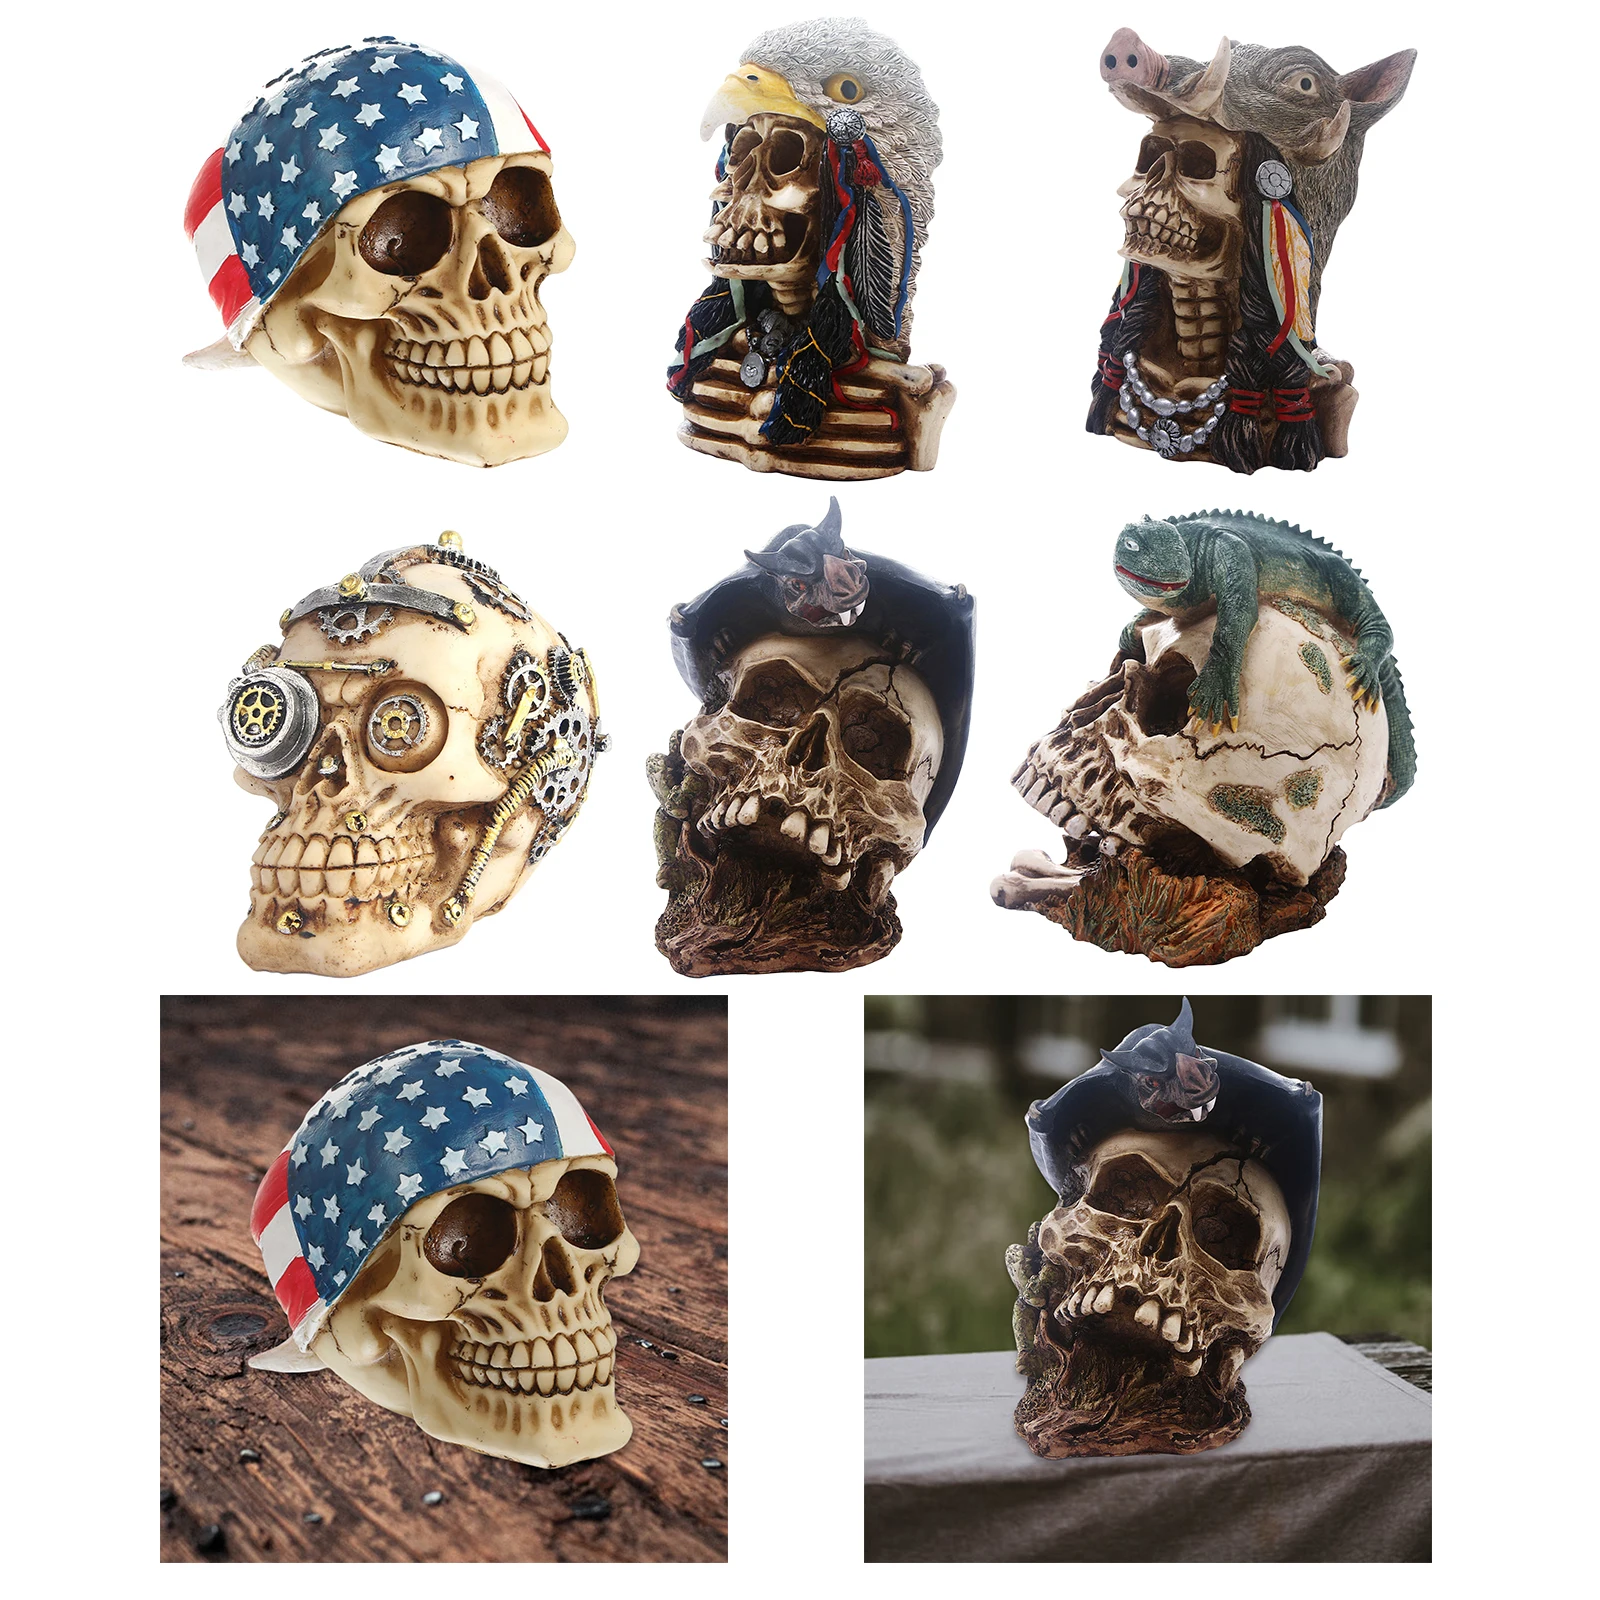 Rivet Helmet Multiple Styles Grinning Skeleton Head Sculpture for Halloween Macabre Spooky Day of The Dead Decor Figurines Sculptures Human Skull Statue Home Décor